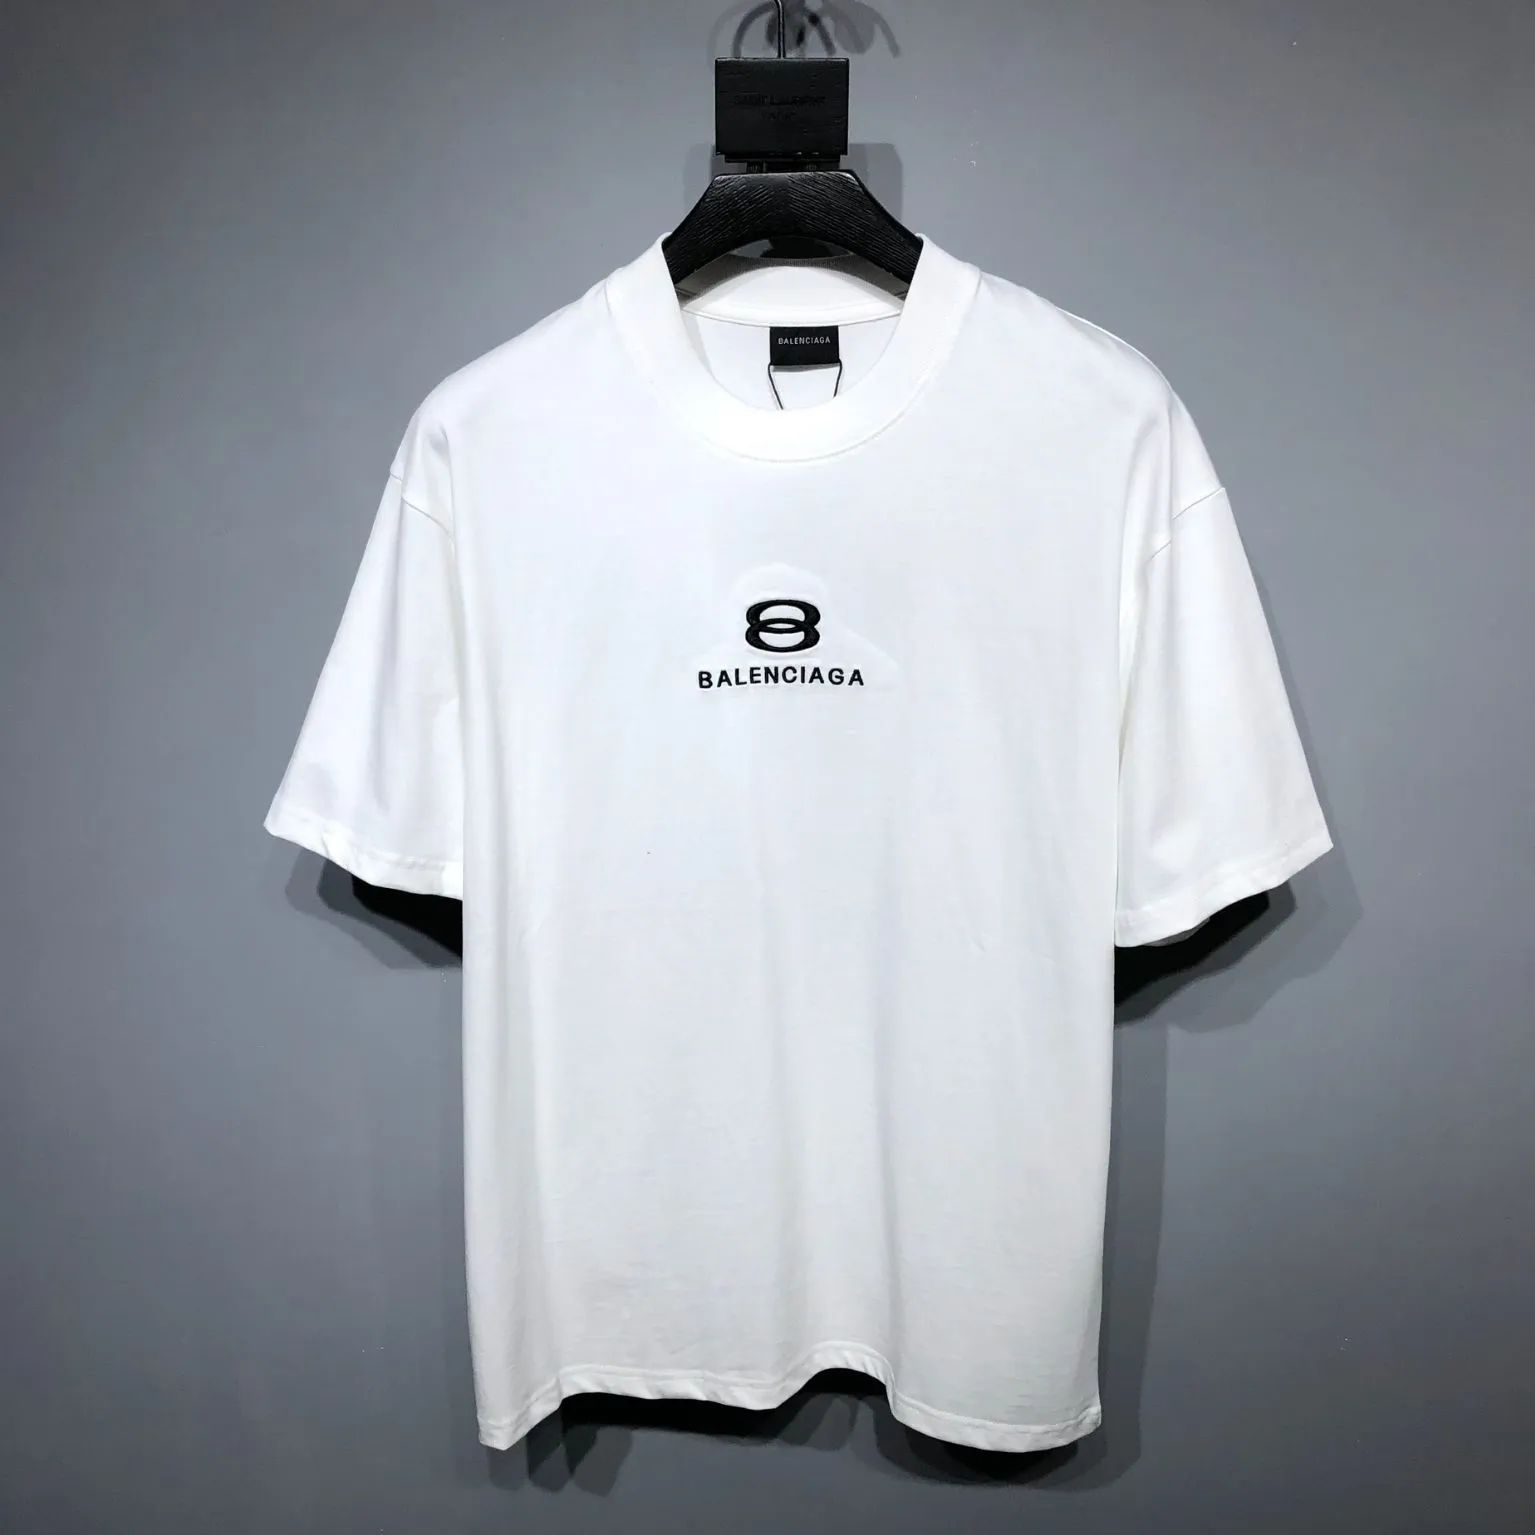 Balenciaga バレンシアガ ロゴ メンズ レディース 半袖Tシャツ ホワイト - メルカリ